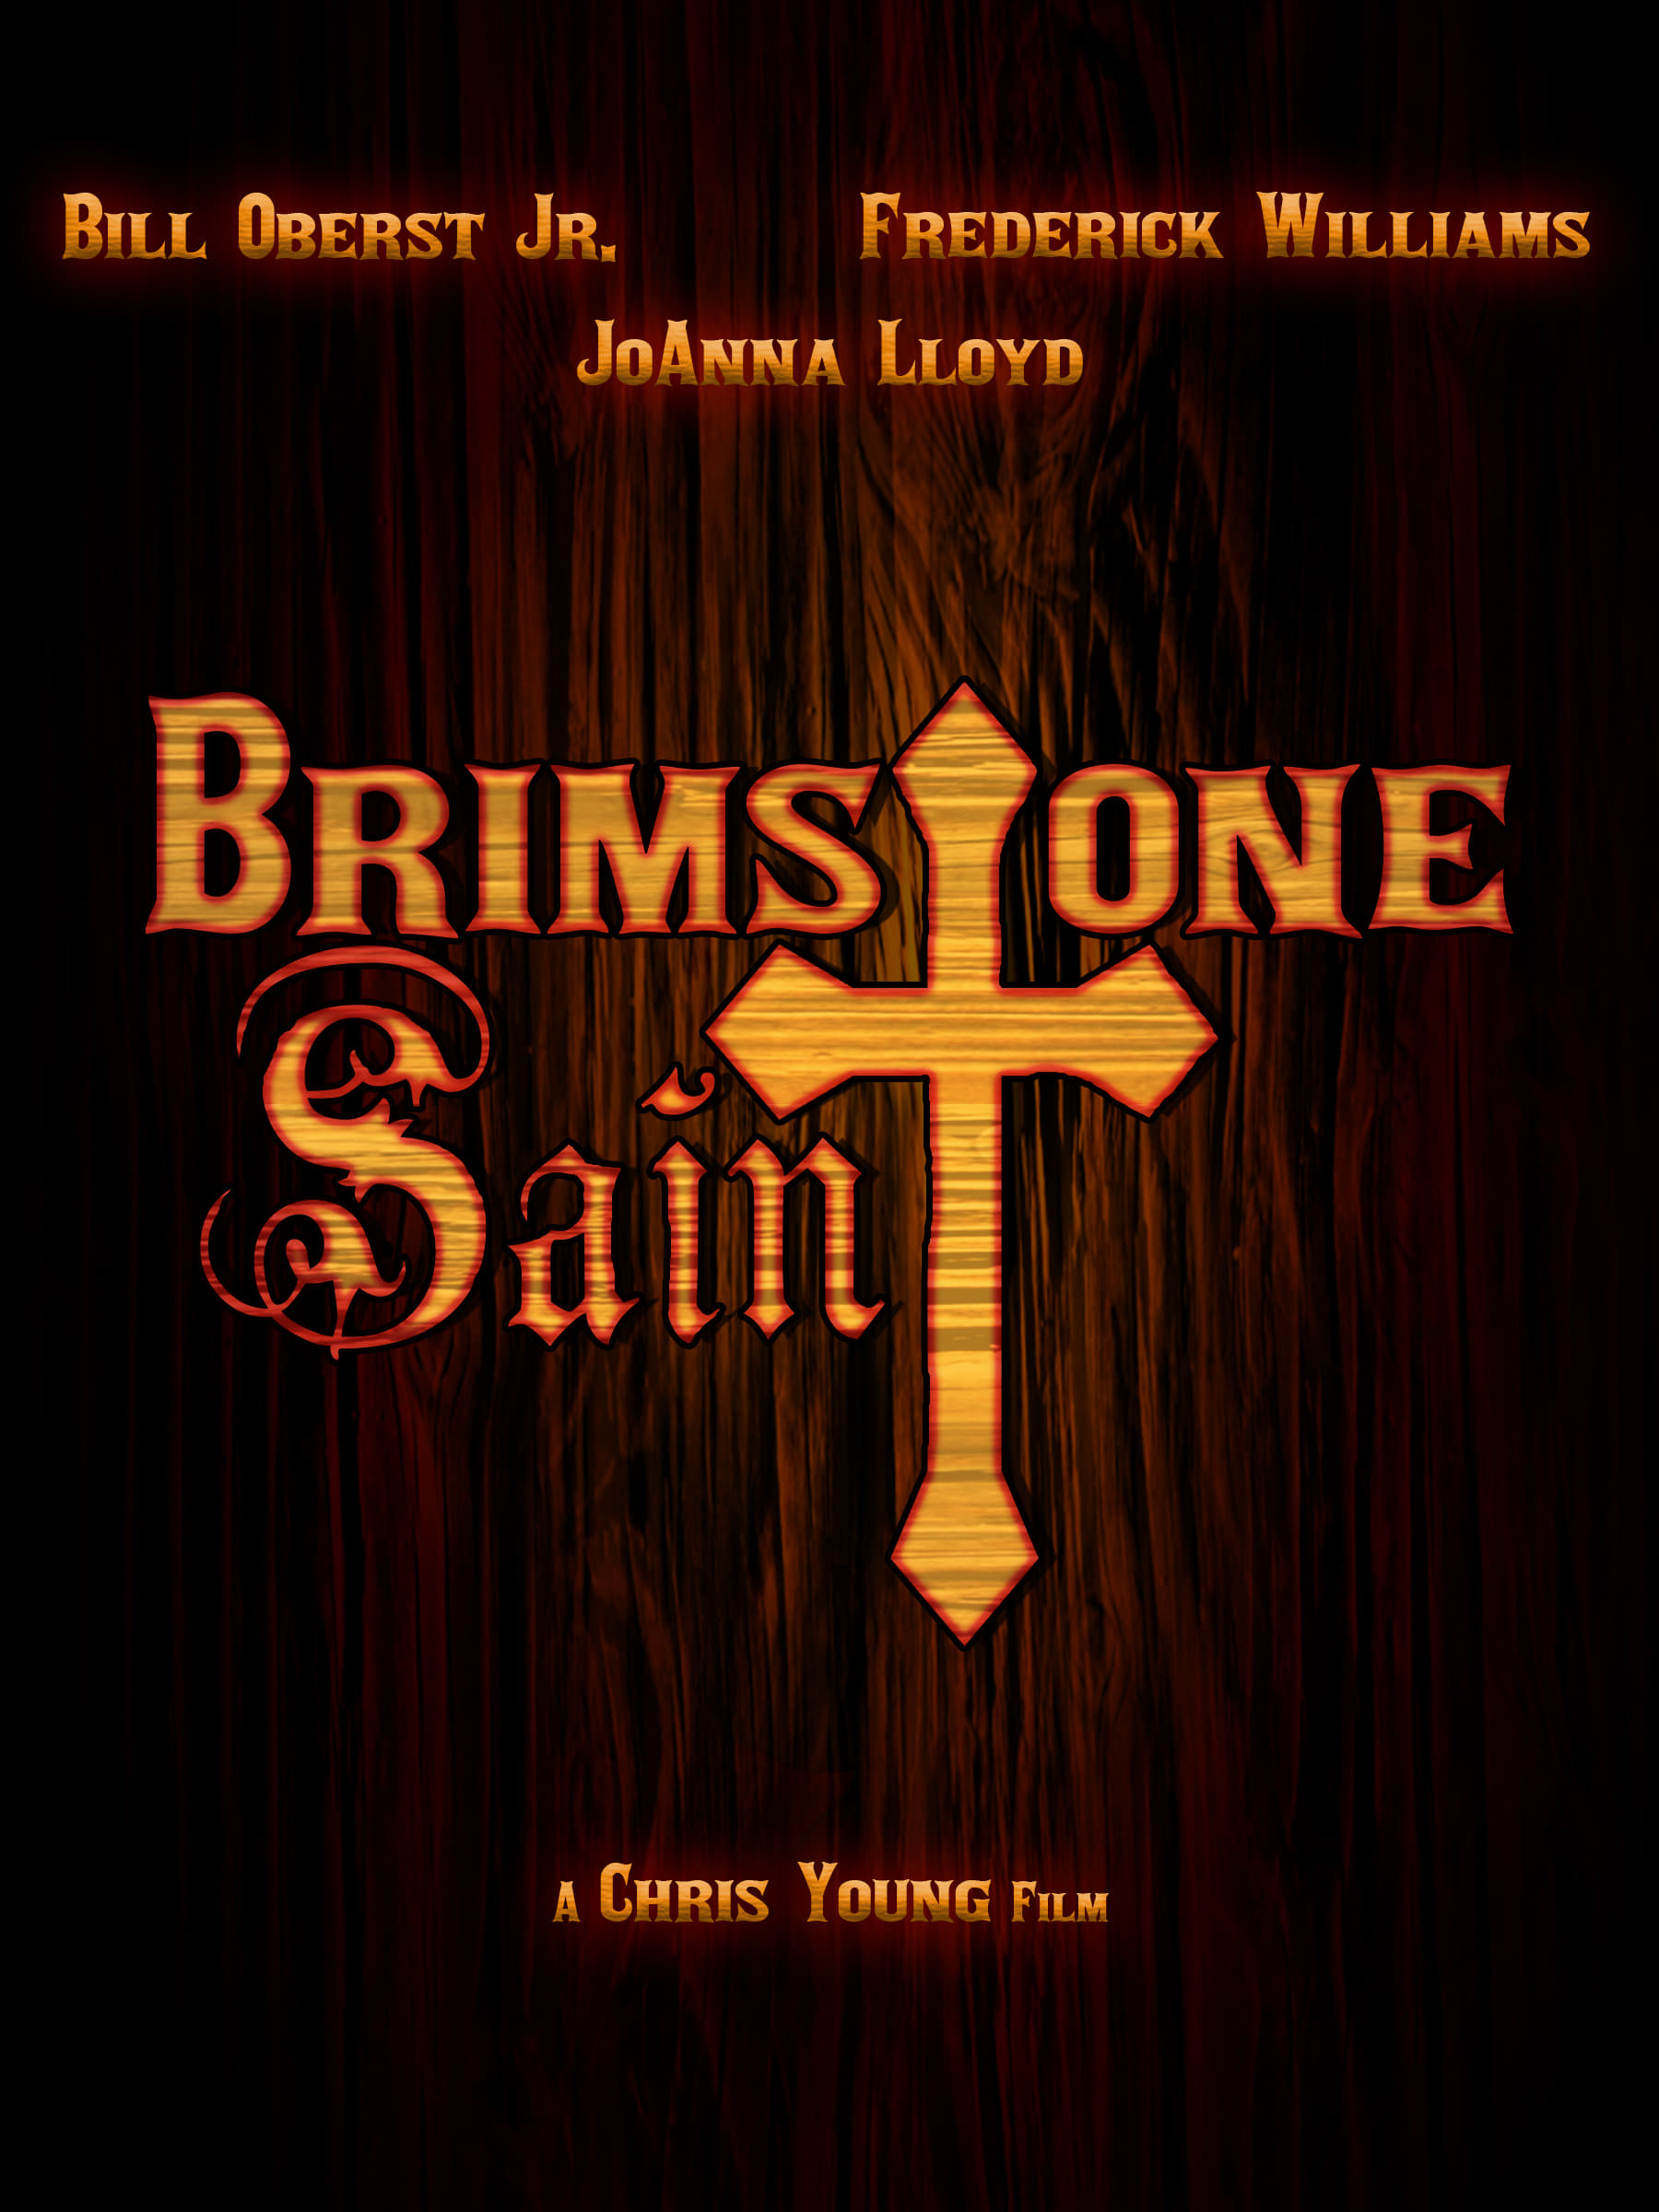 Brimstone Saint